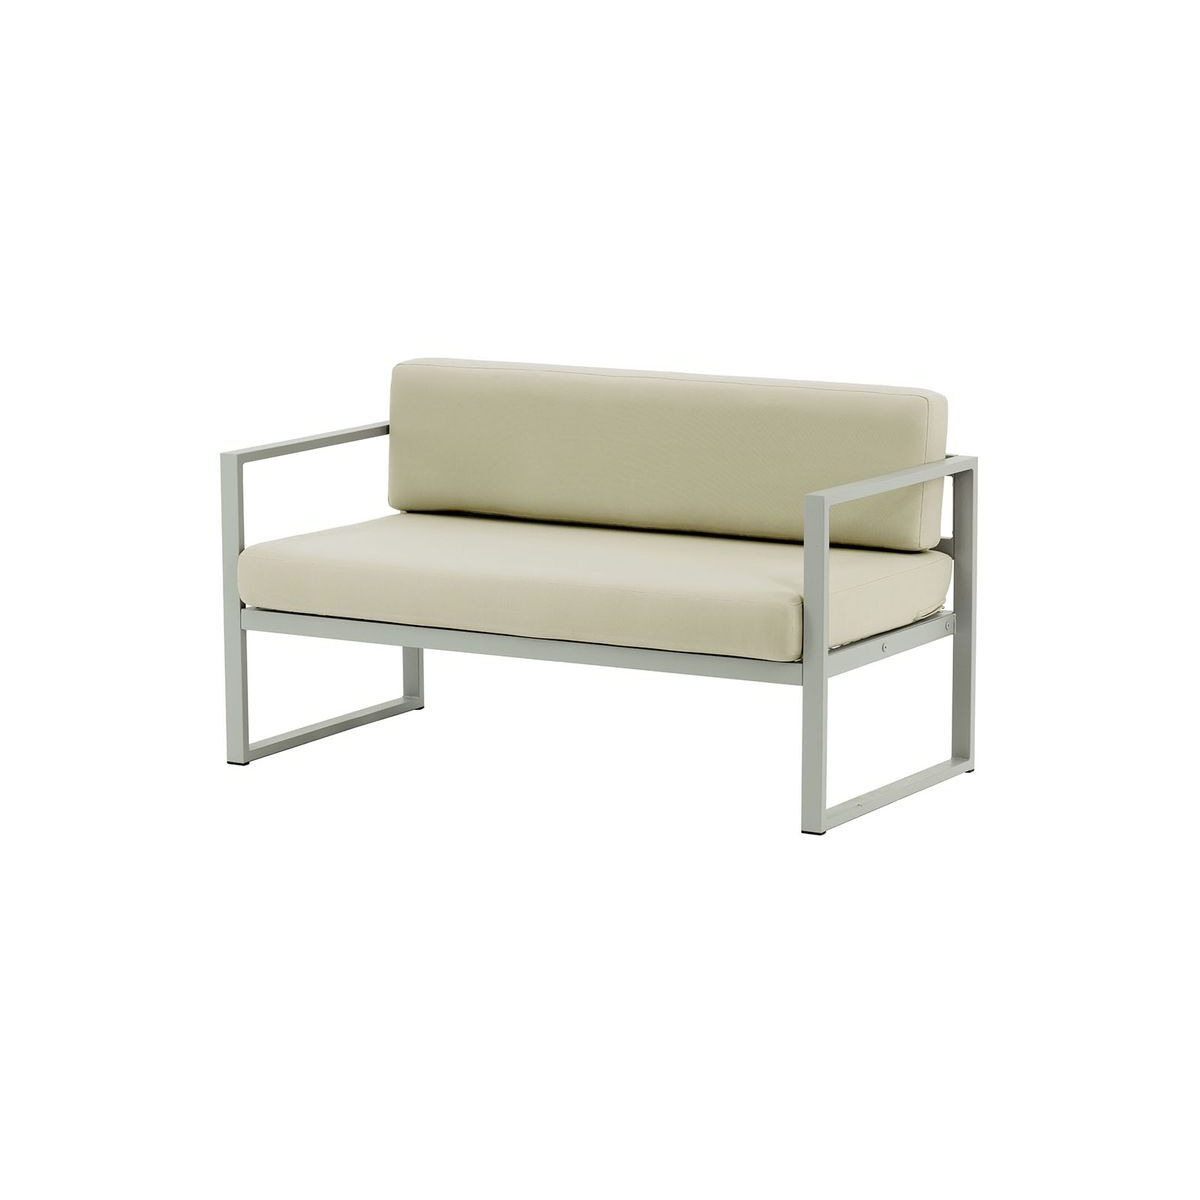 Sunset Garden 2 Seater Sofa, cream, Leg colour: grey steel - image 1